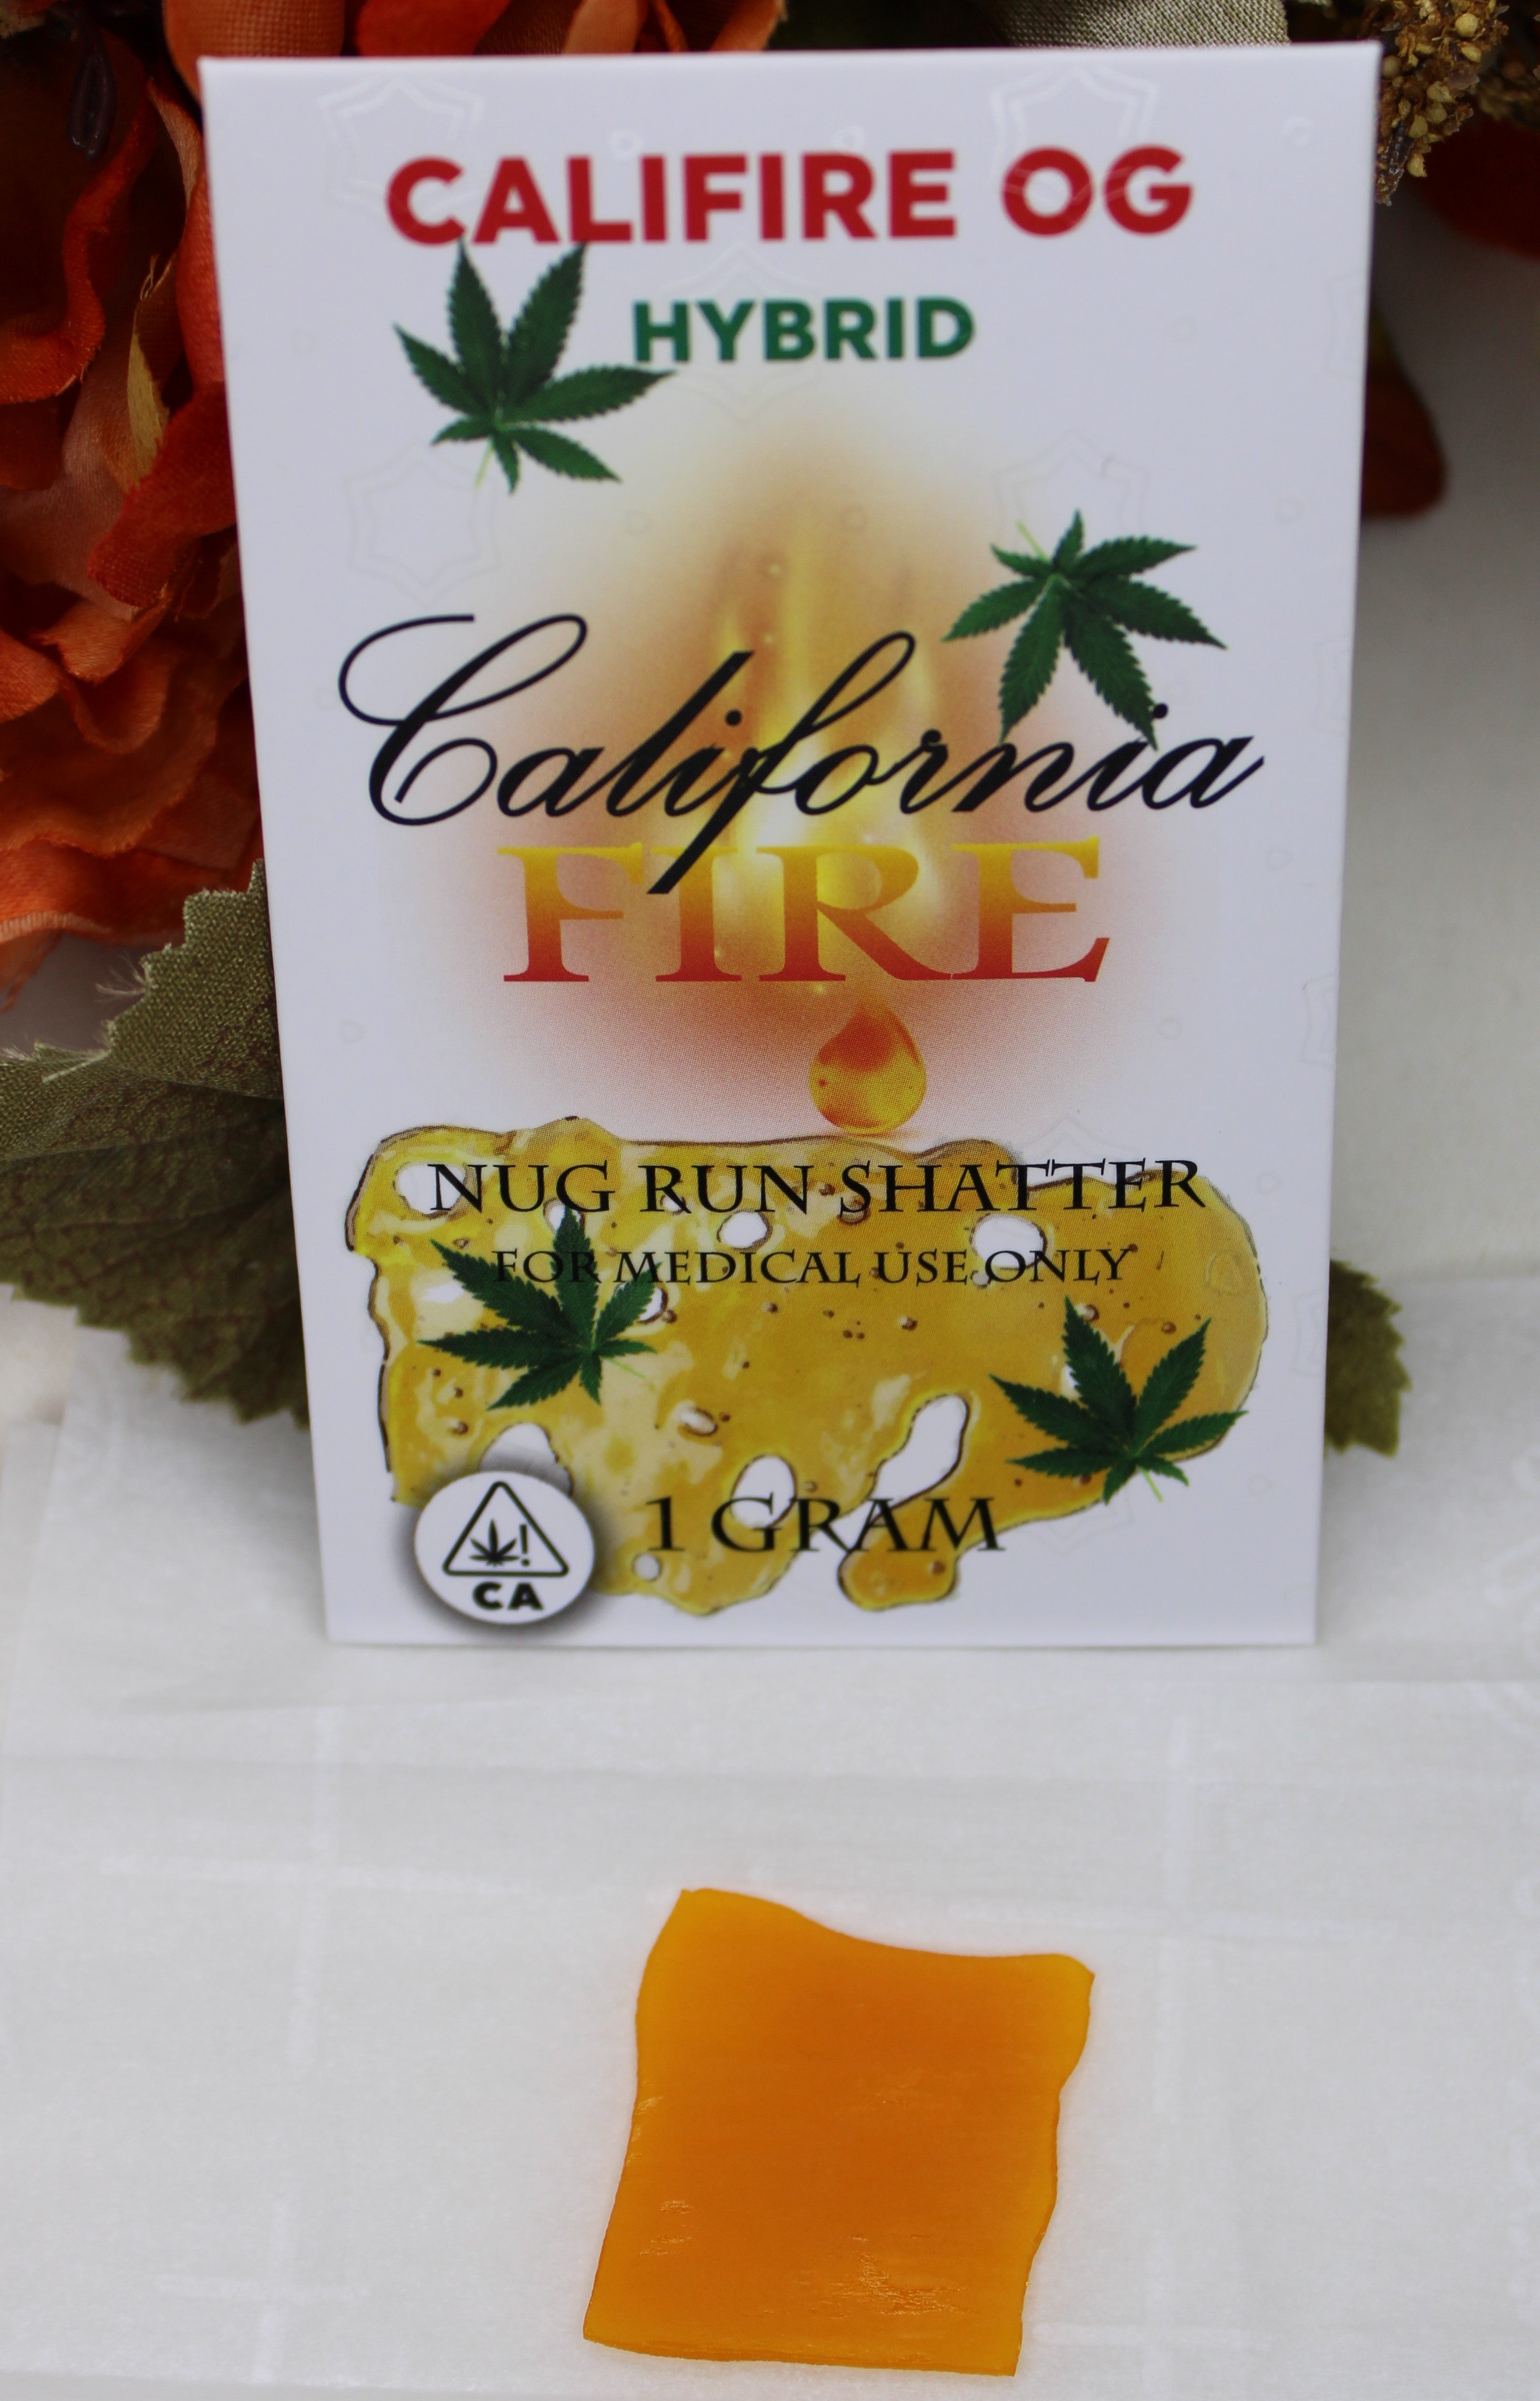 California Fire Nug Run Shatter "Cali Fire OG" (1g)